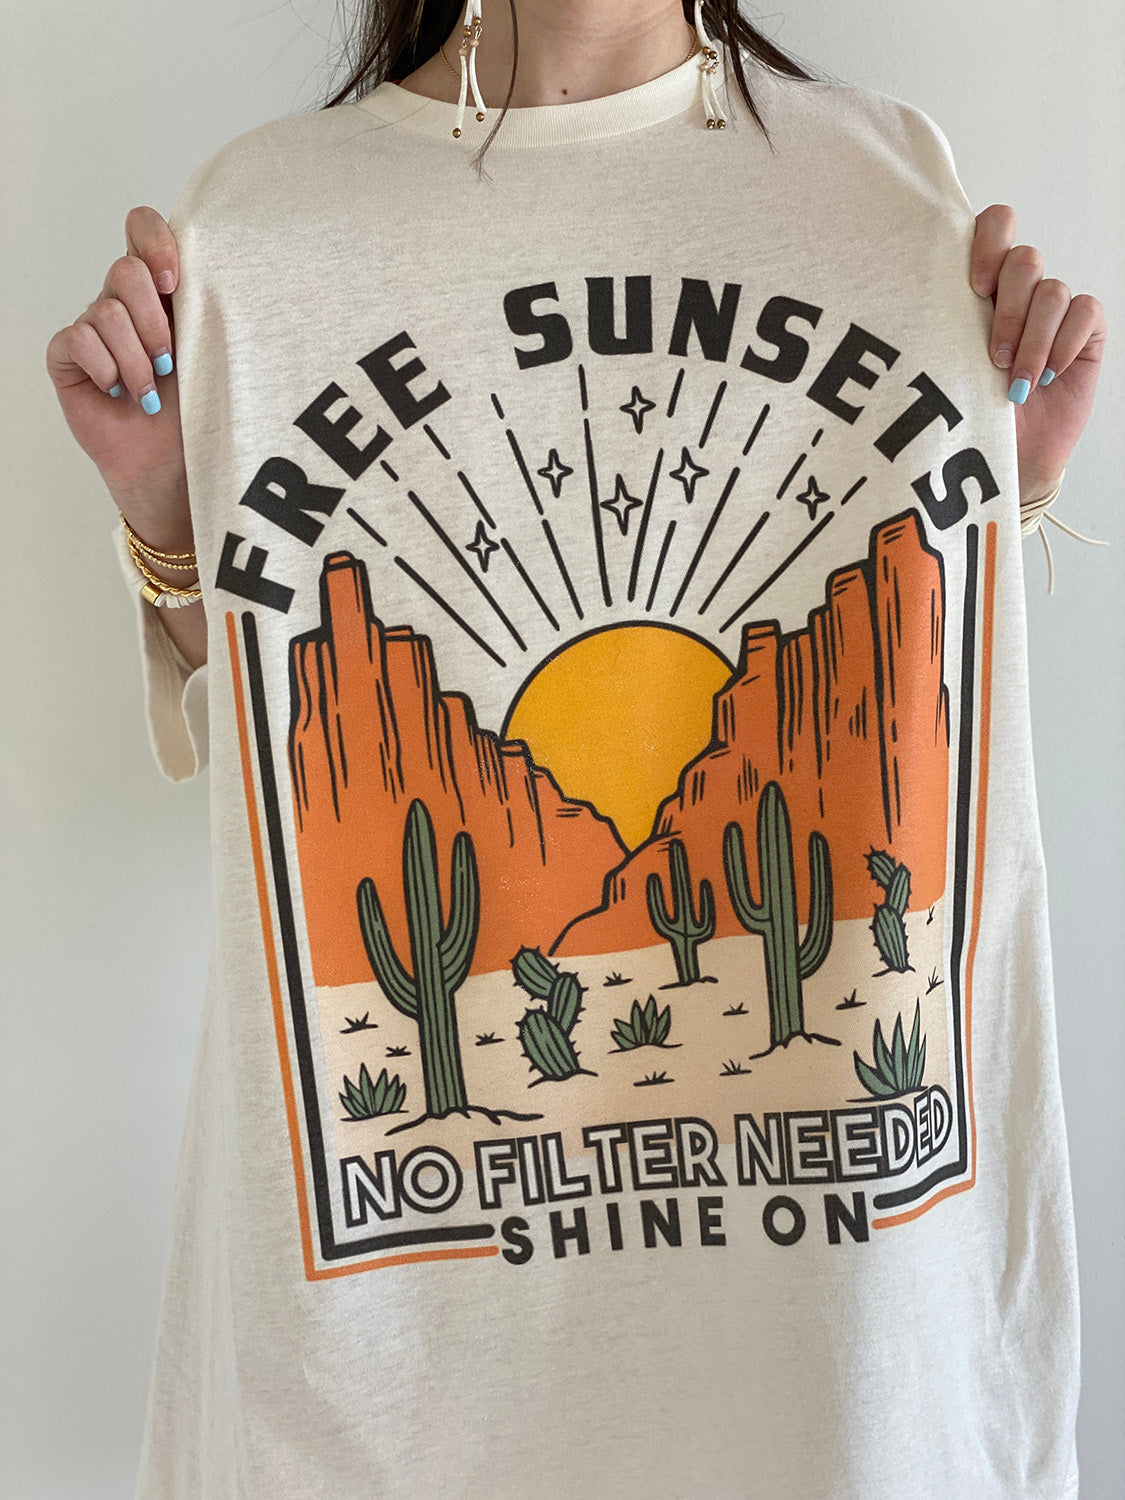 Free Sunsets Western Graphic Tshirt OR Tshirt Dress!